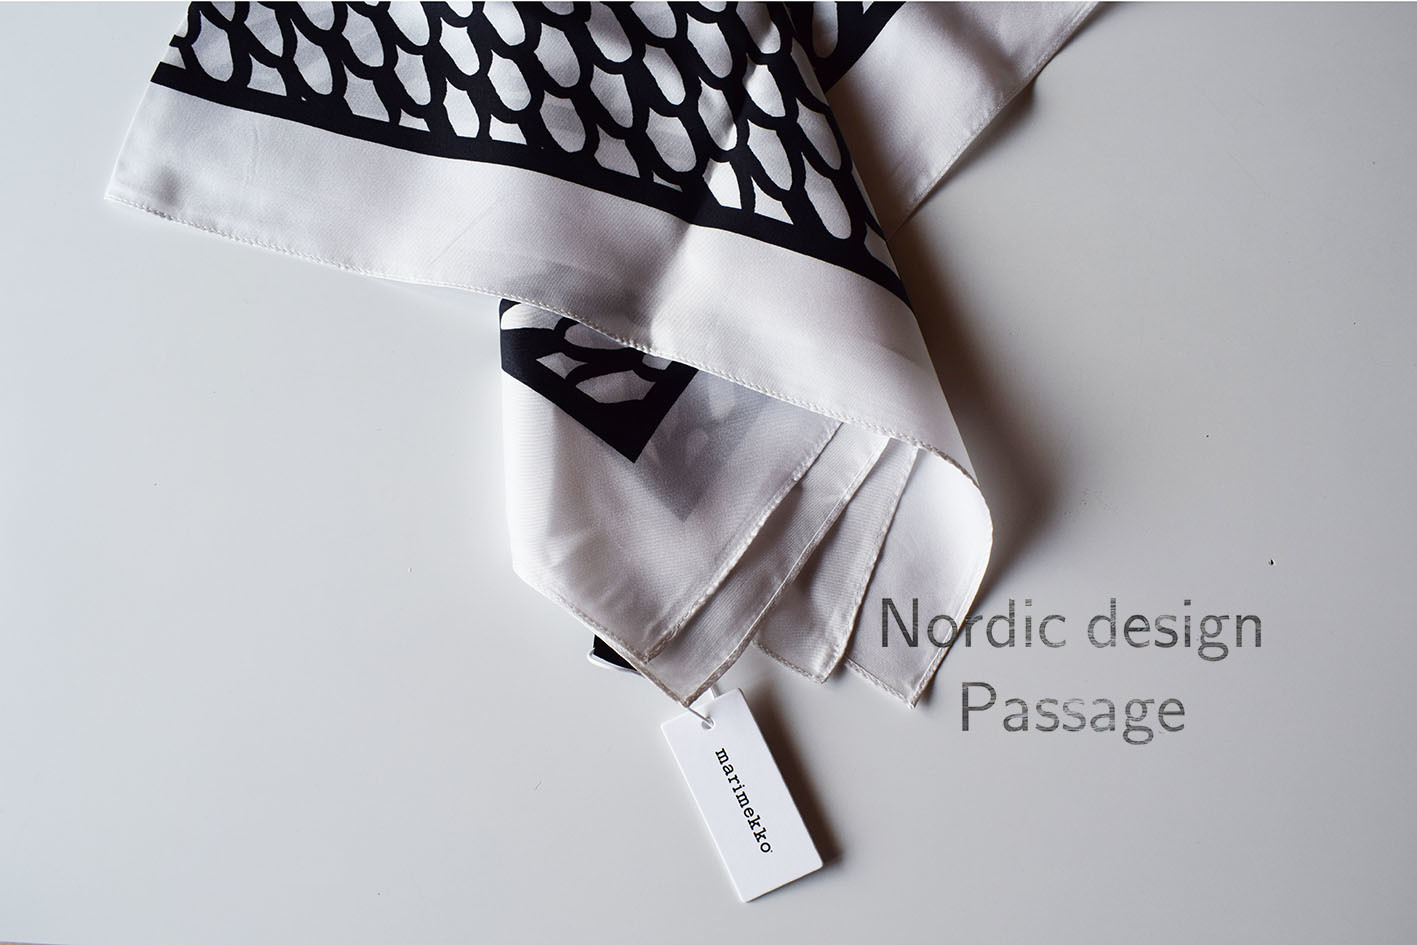 Marimekko マリメッコ PIKKUSUOMU シルクスカーフ - Nordic Design Passage